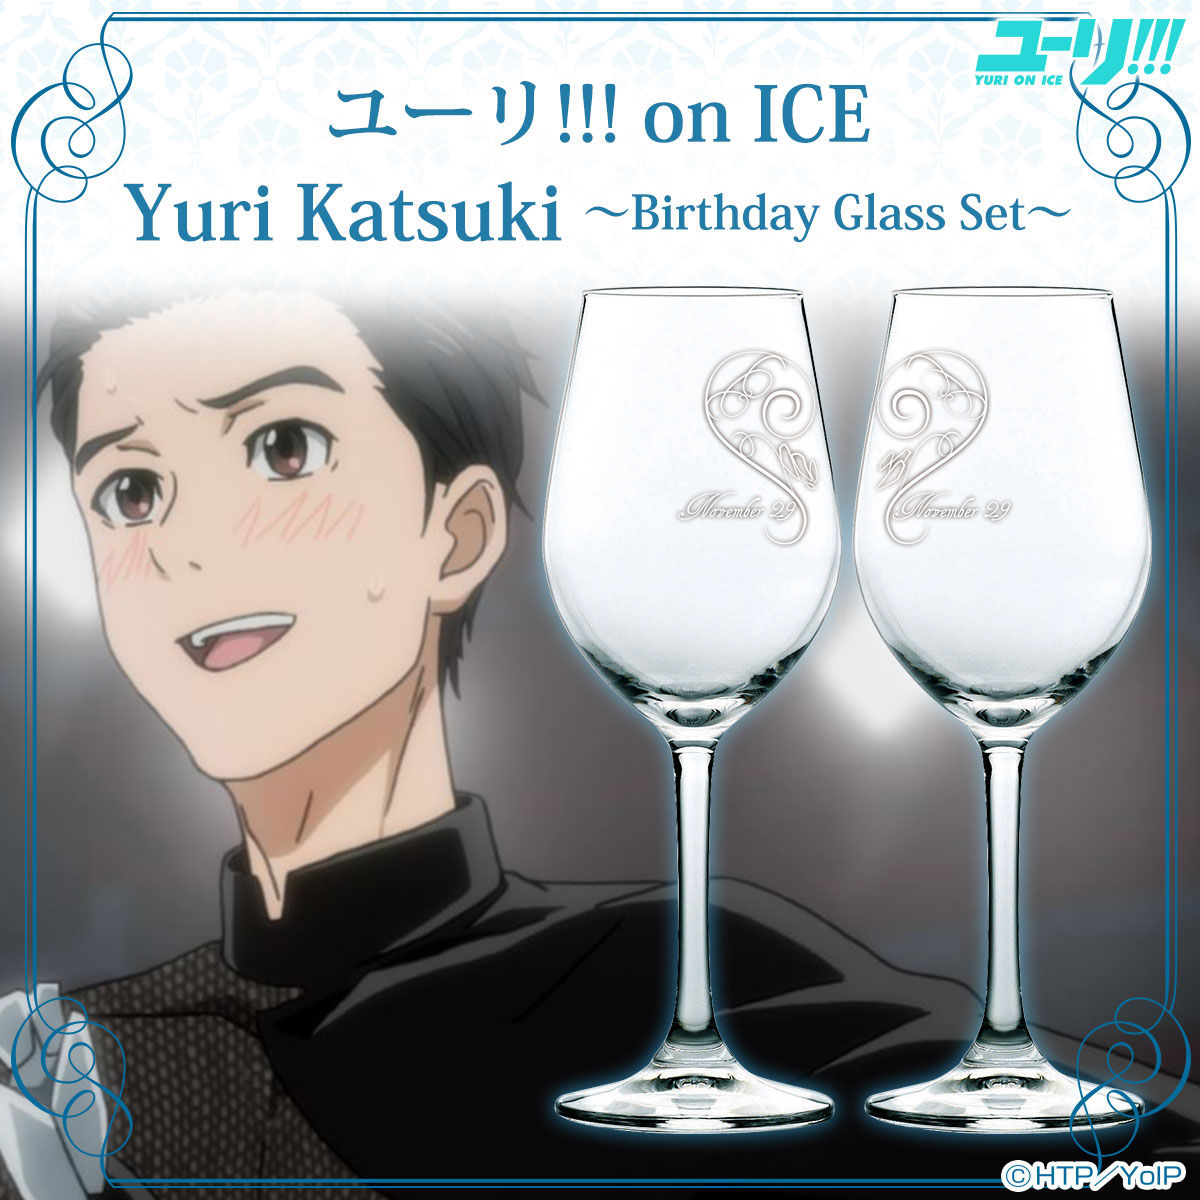 Yuri On Ice Yuri Katsuki Birthday Glass Set ユーリオンアイス 勝生勇利 バースデーグラスセット 女性に人気 キャラクター 趣味 コレクション バンダイナムコグループ公式通販サイト